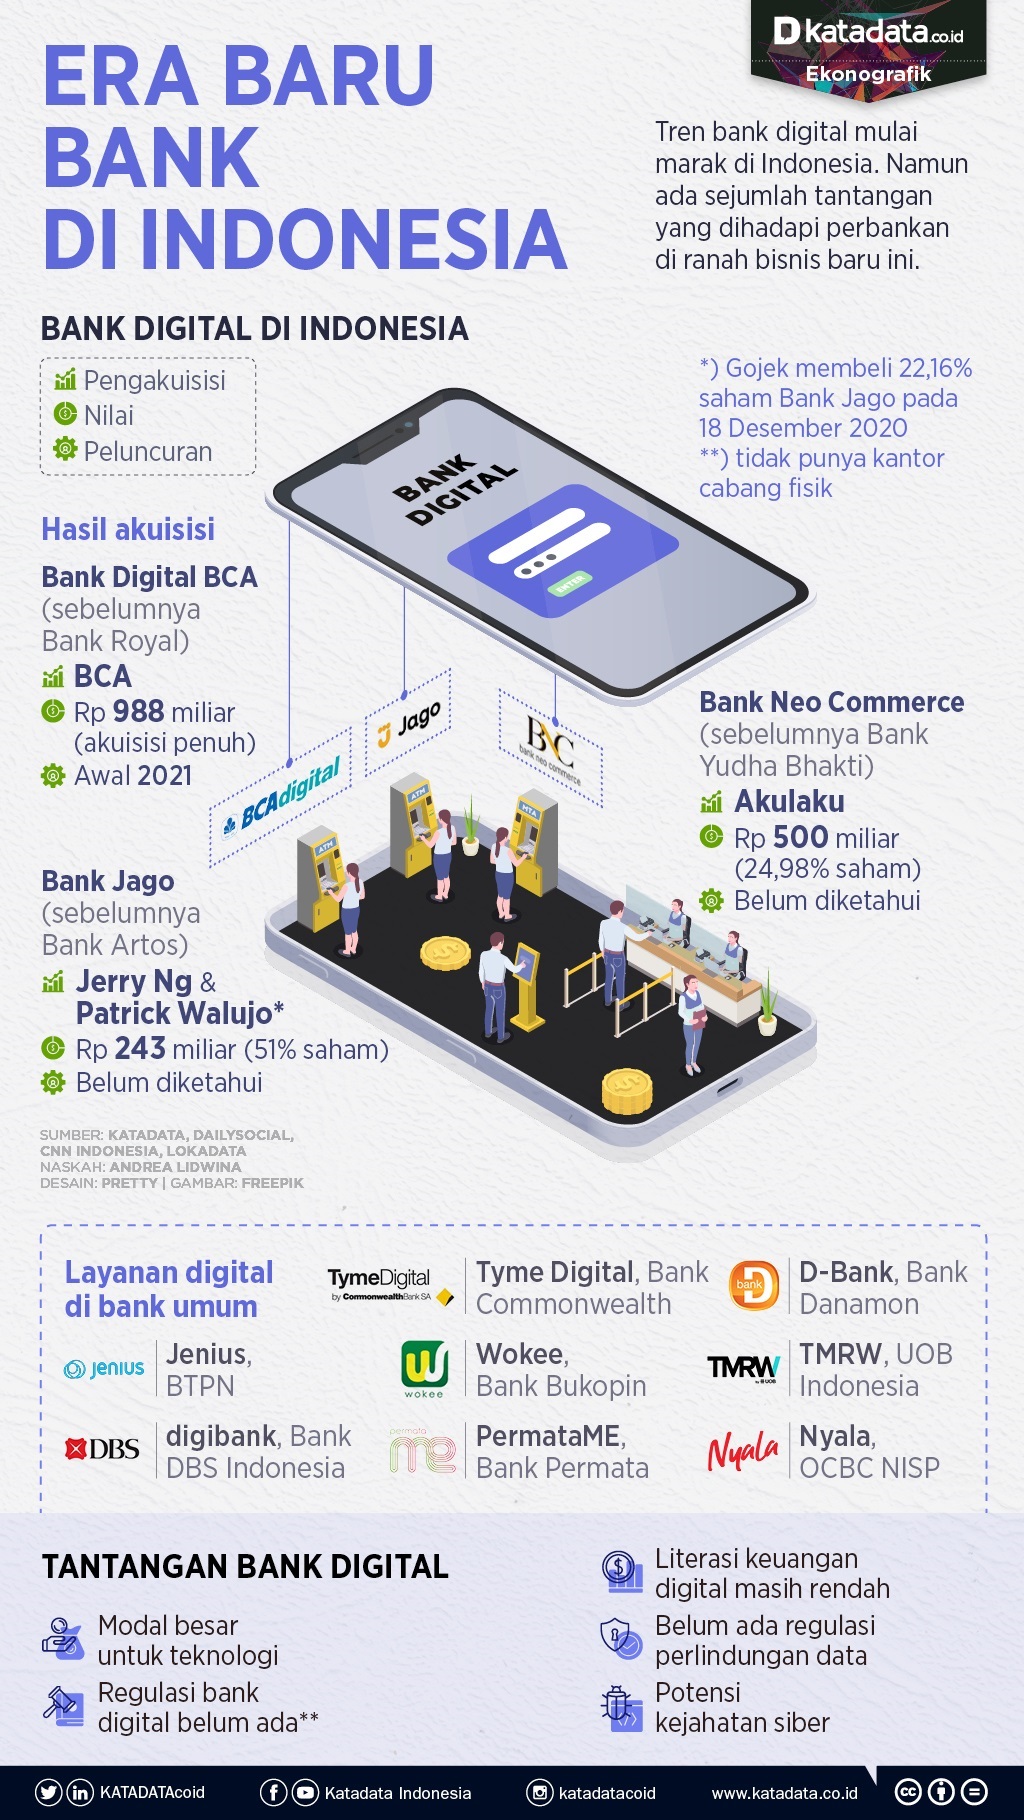 Bank digital